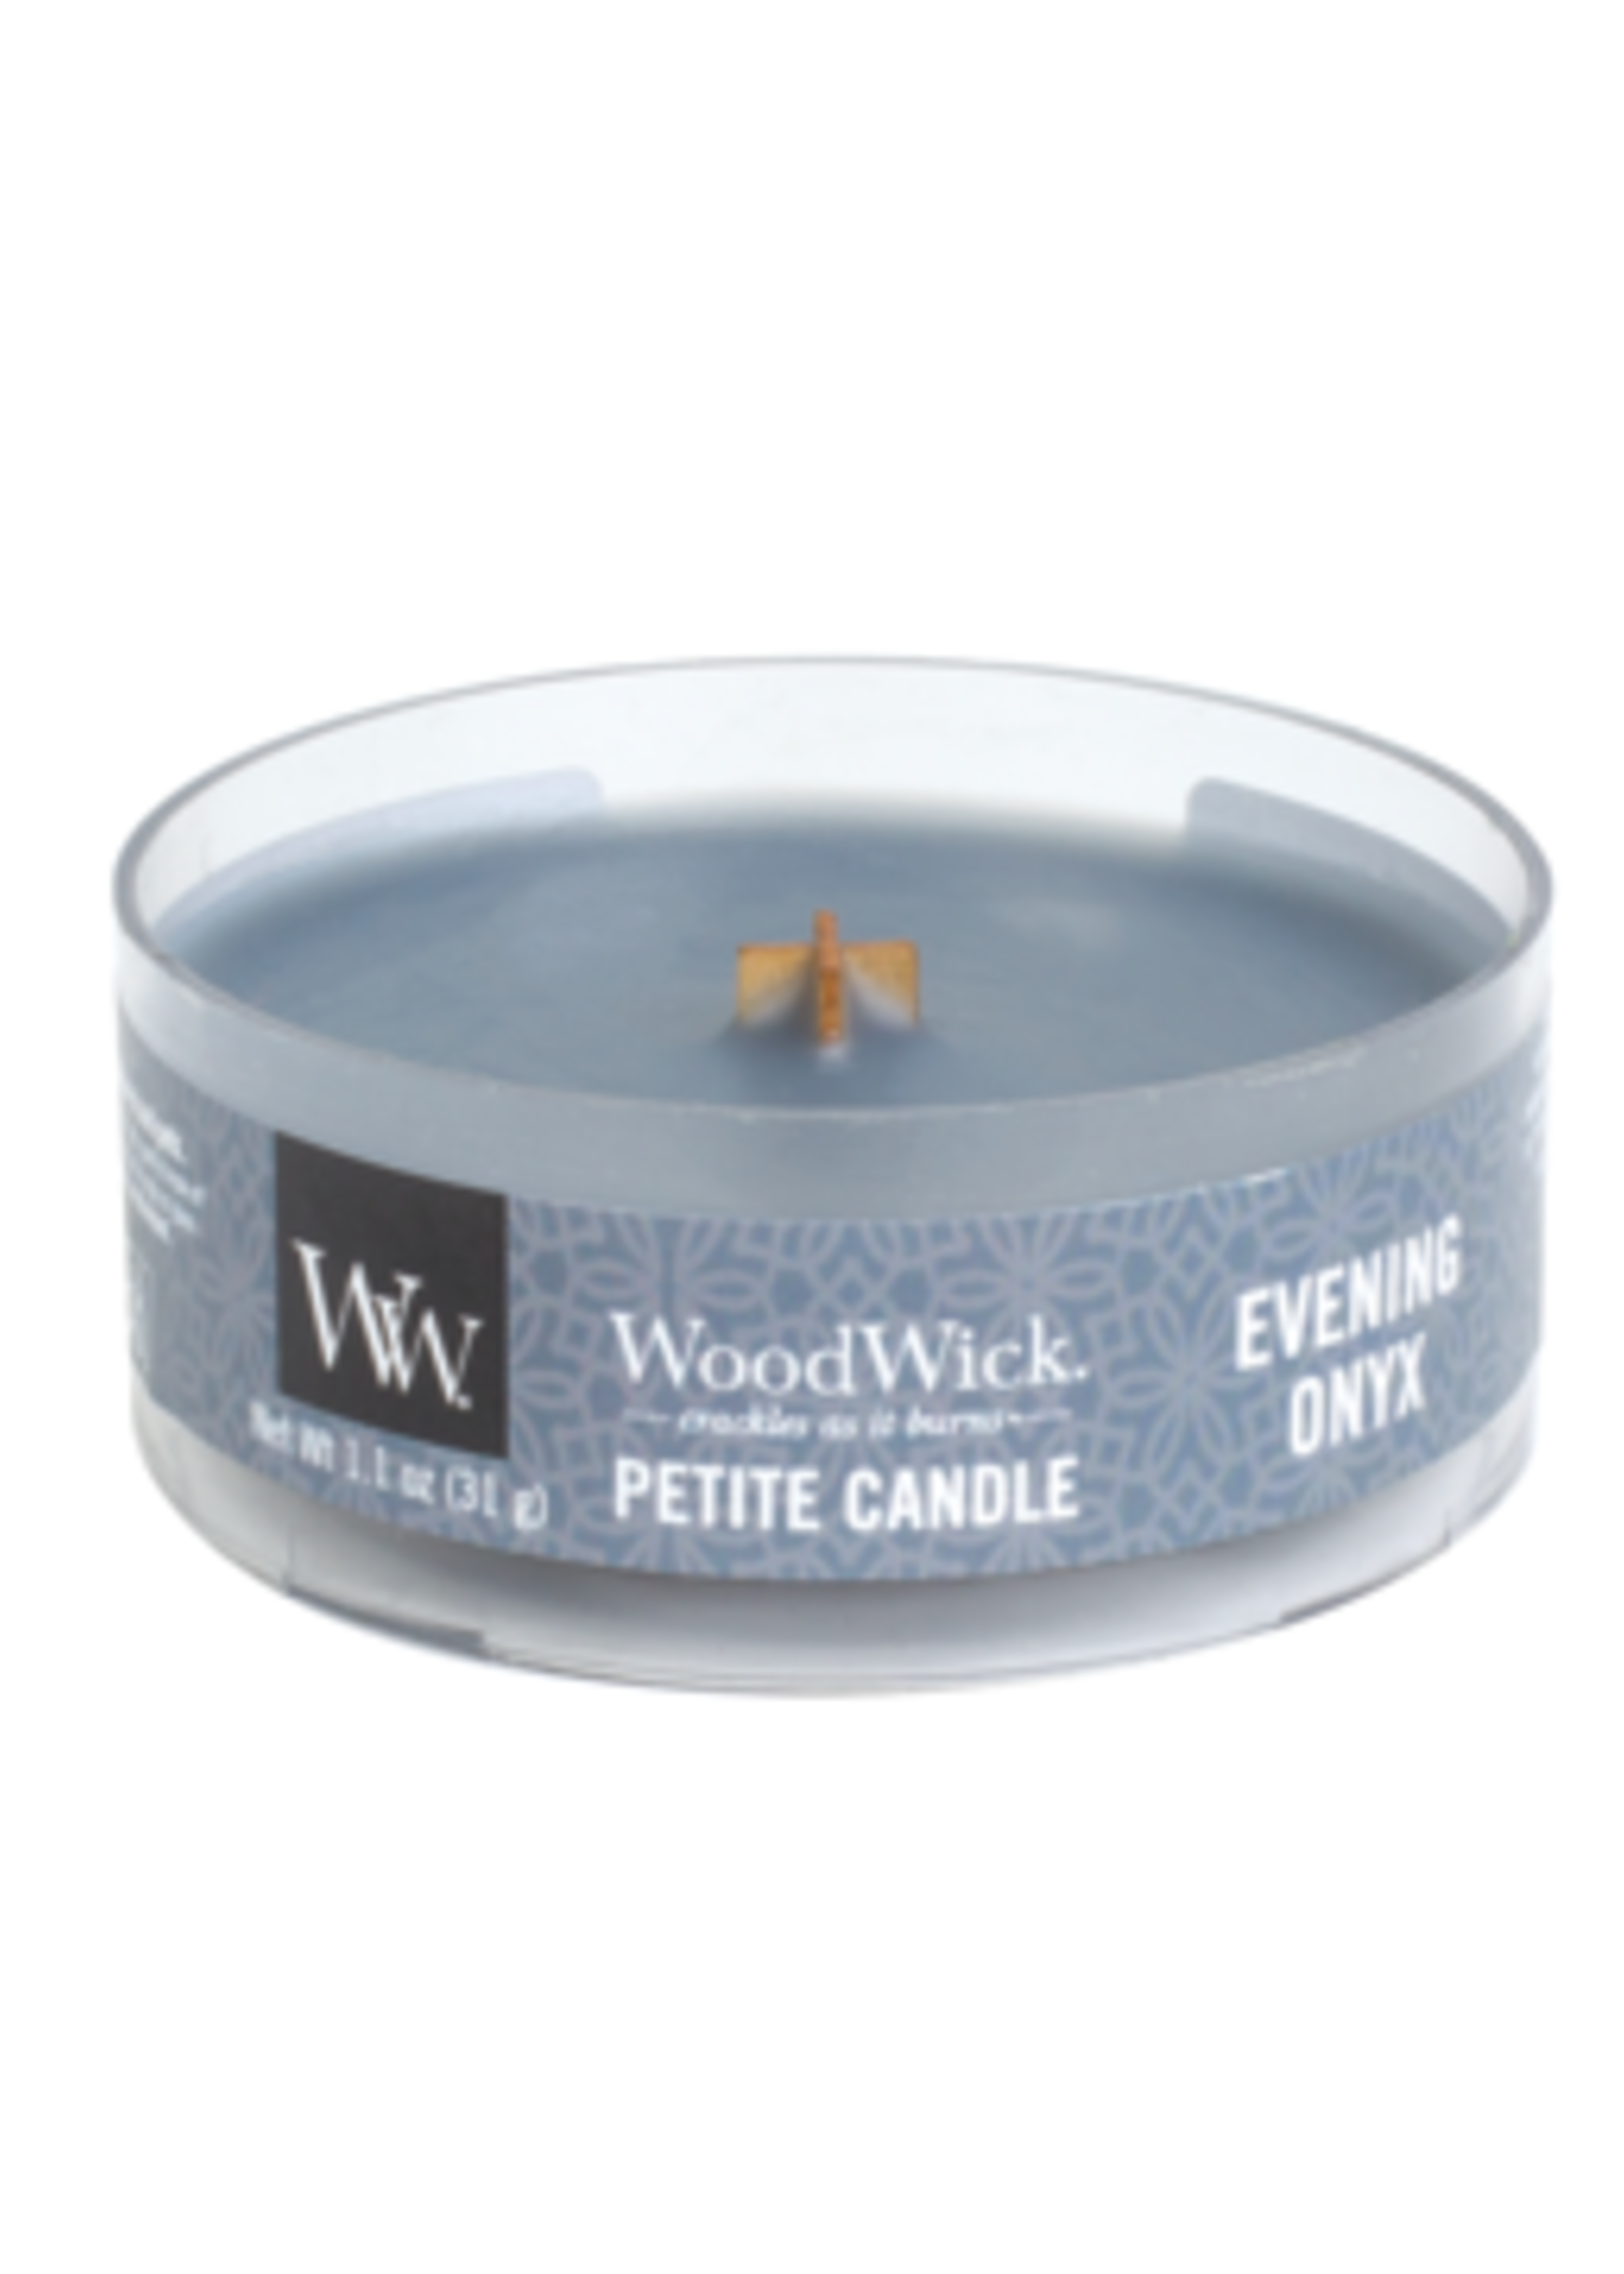 Woodwick Evening onyx petite candle